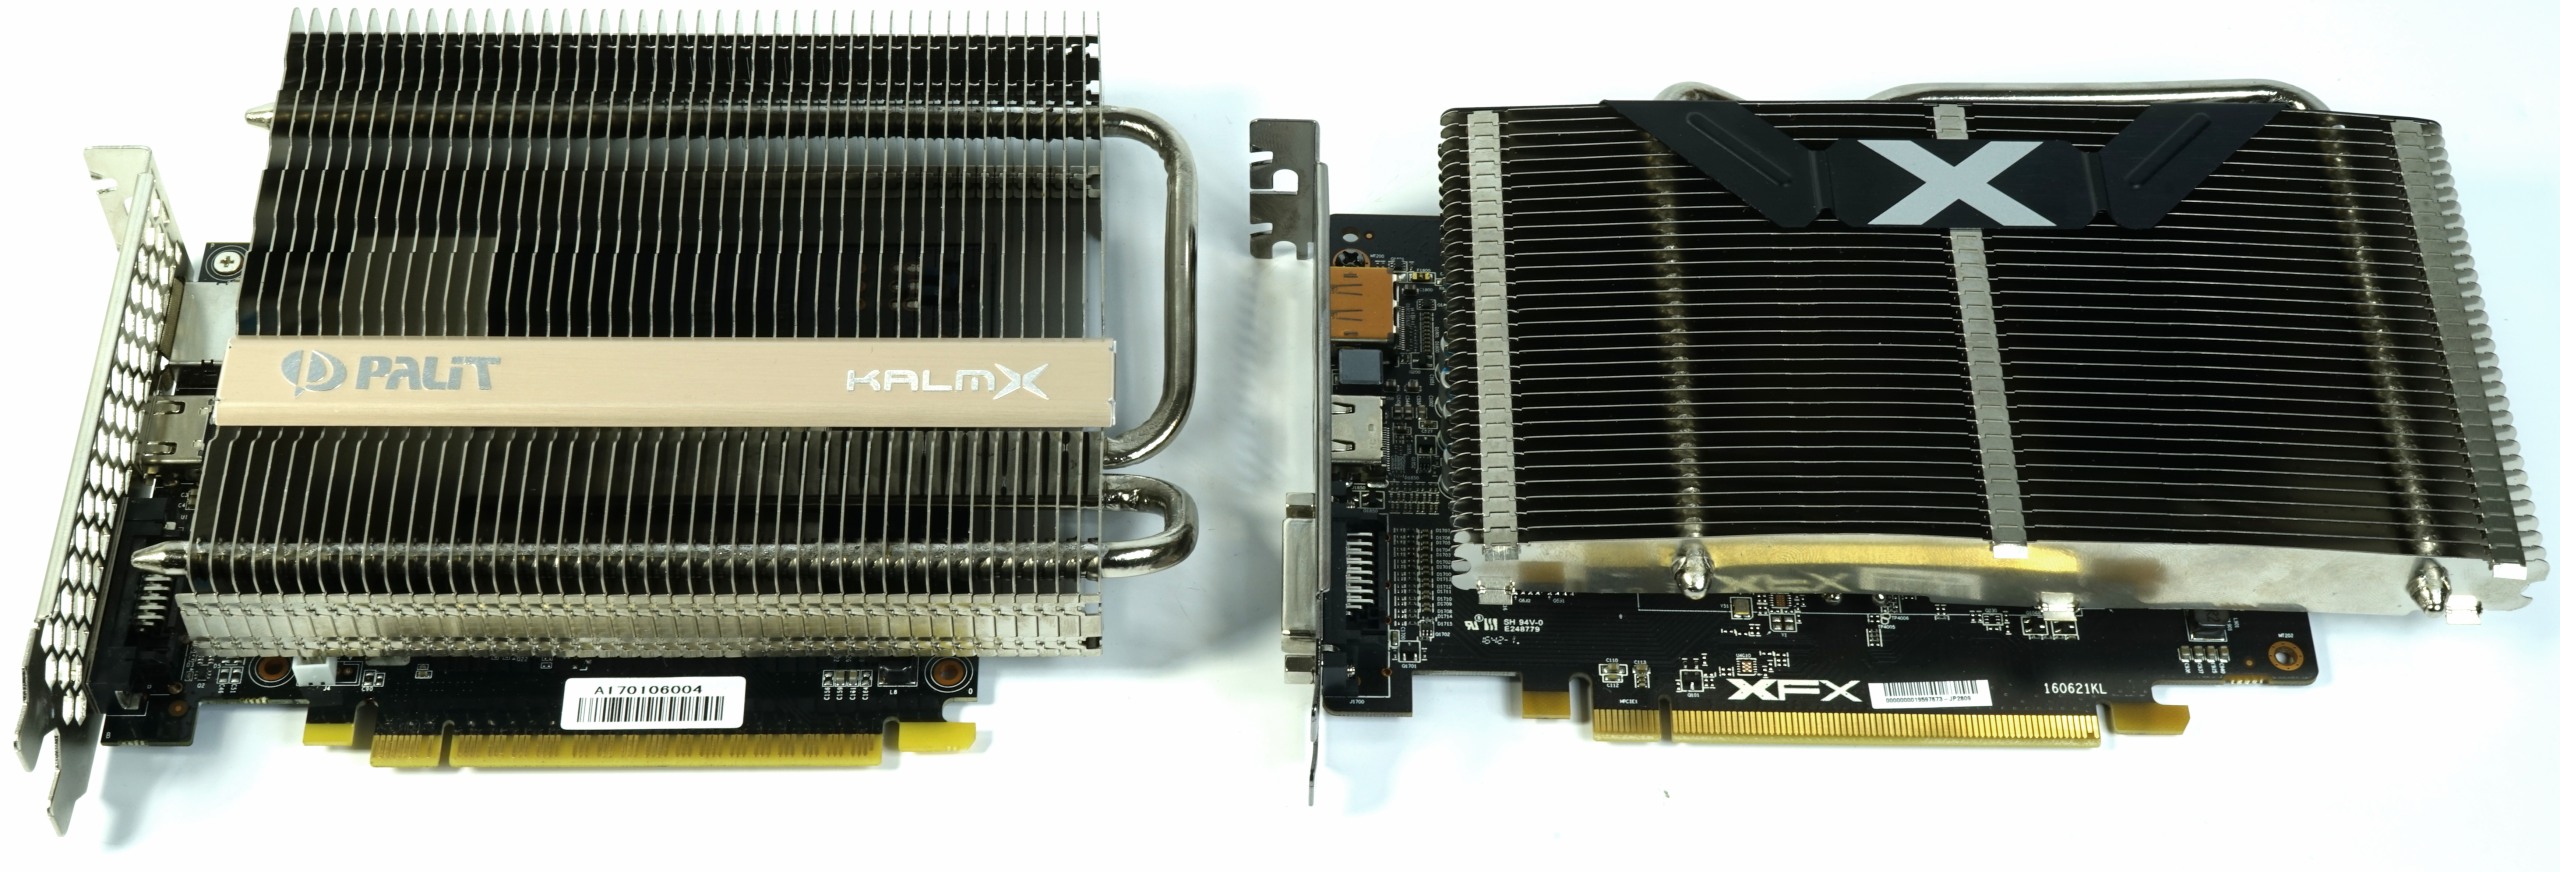 Palit GTX 1050 Ti KalmX 4GB vs. XFX 